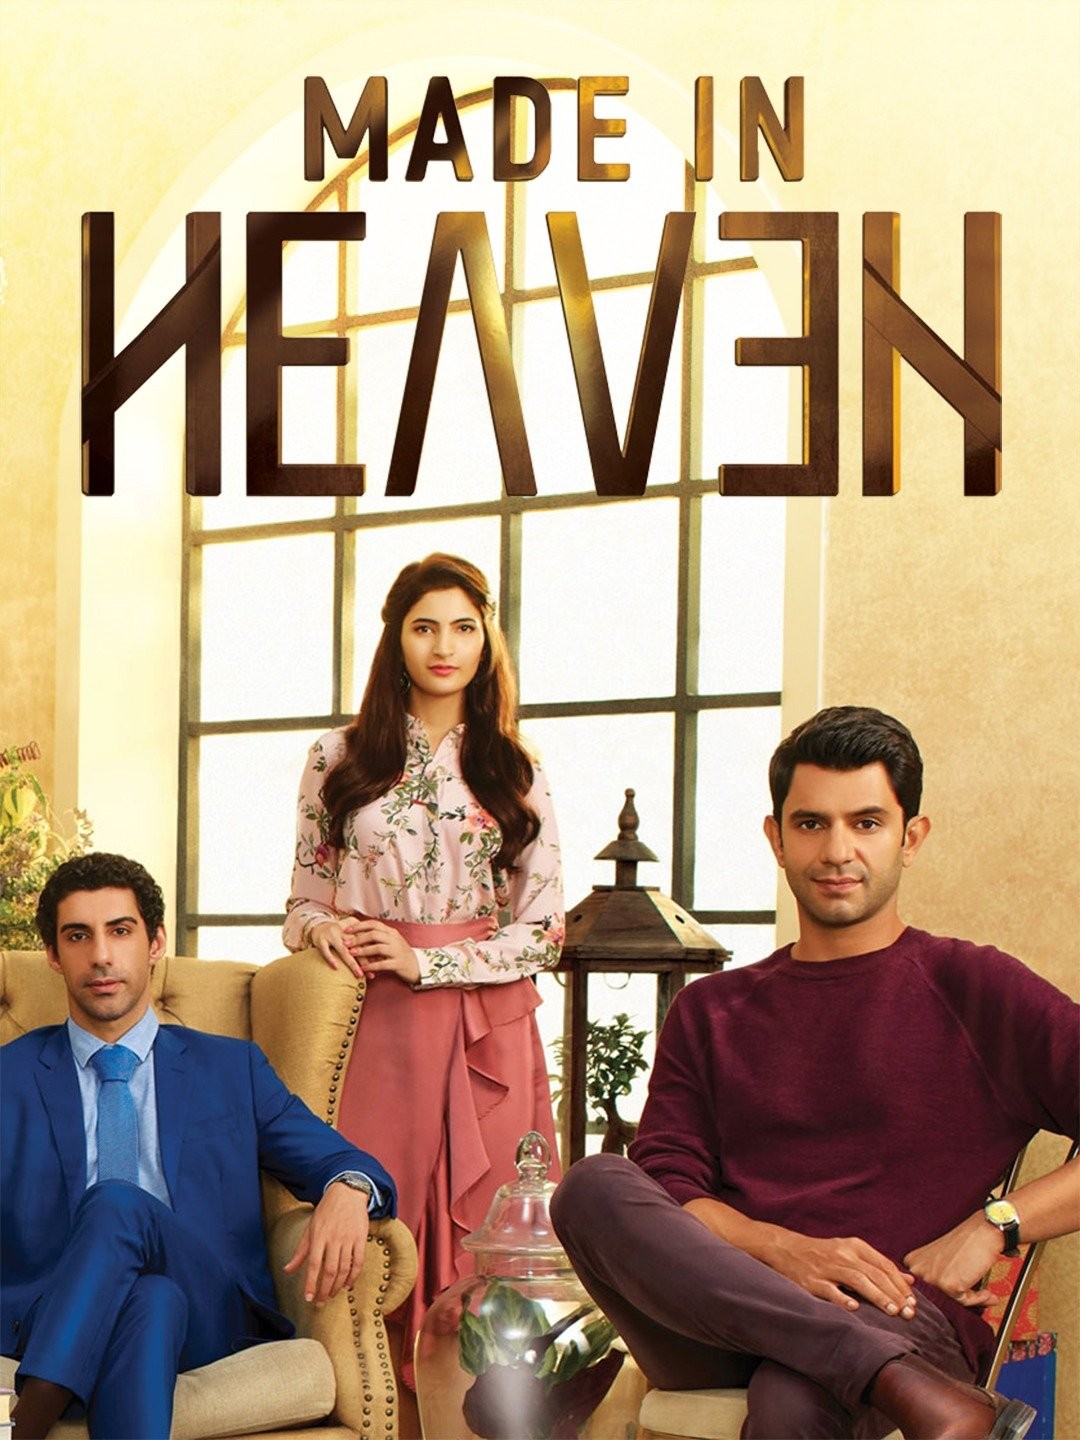 Made in Heaven (TV series) - Wikipedia